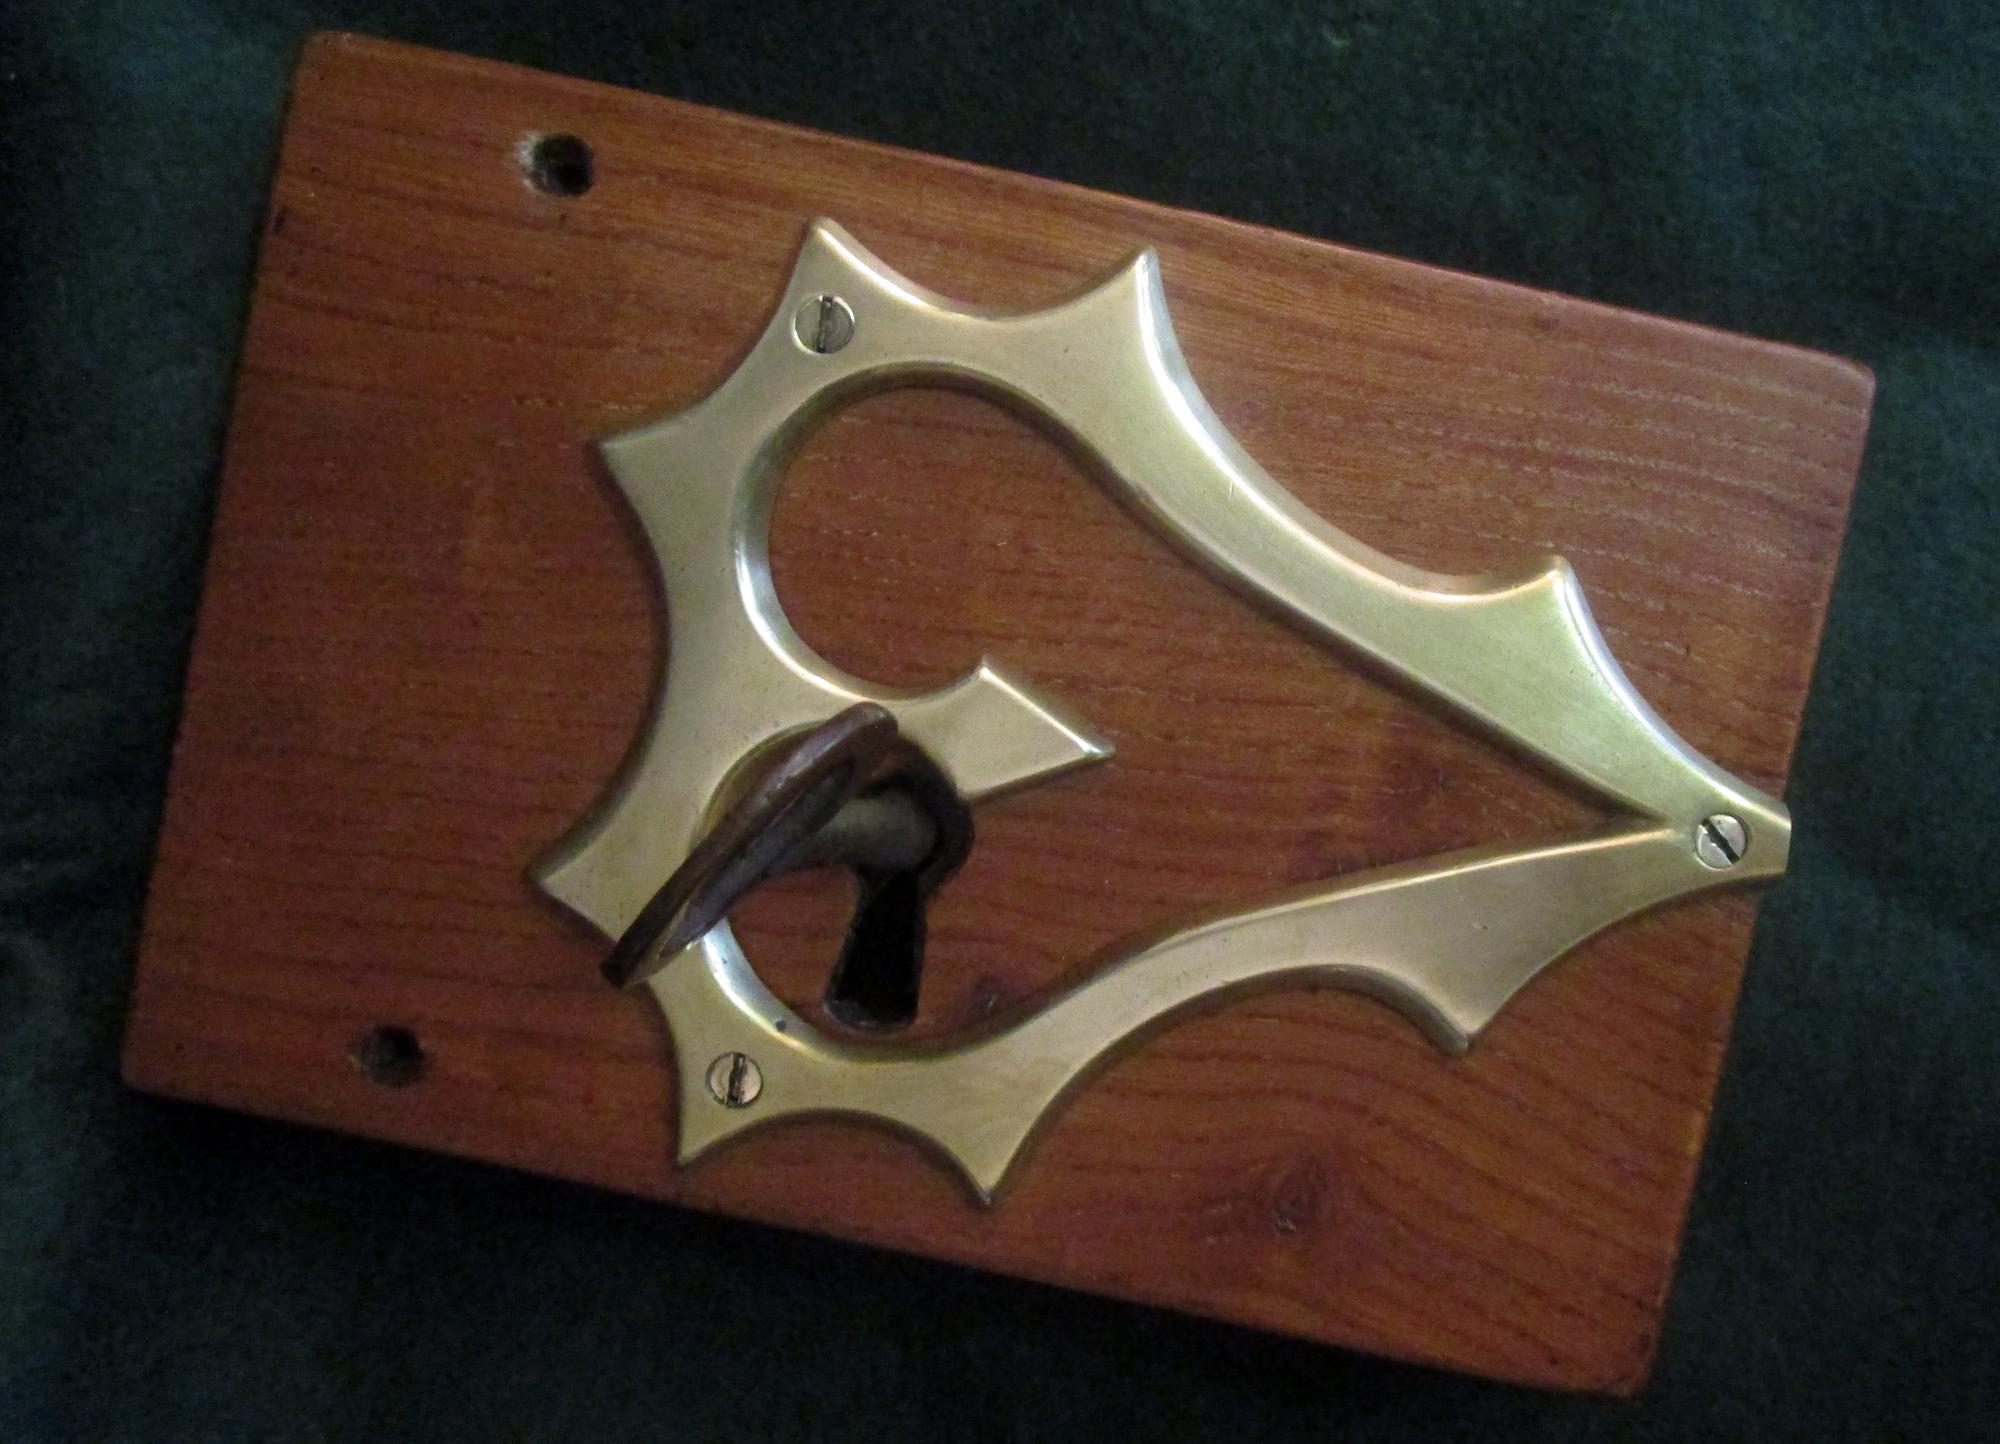 Decorative heart motif rim lock mechanism made of solid oak and brass. All original with key.
See measurements below.